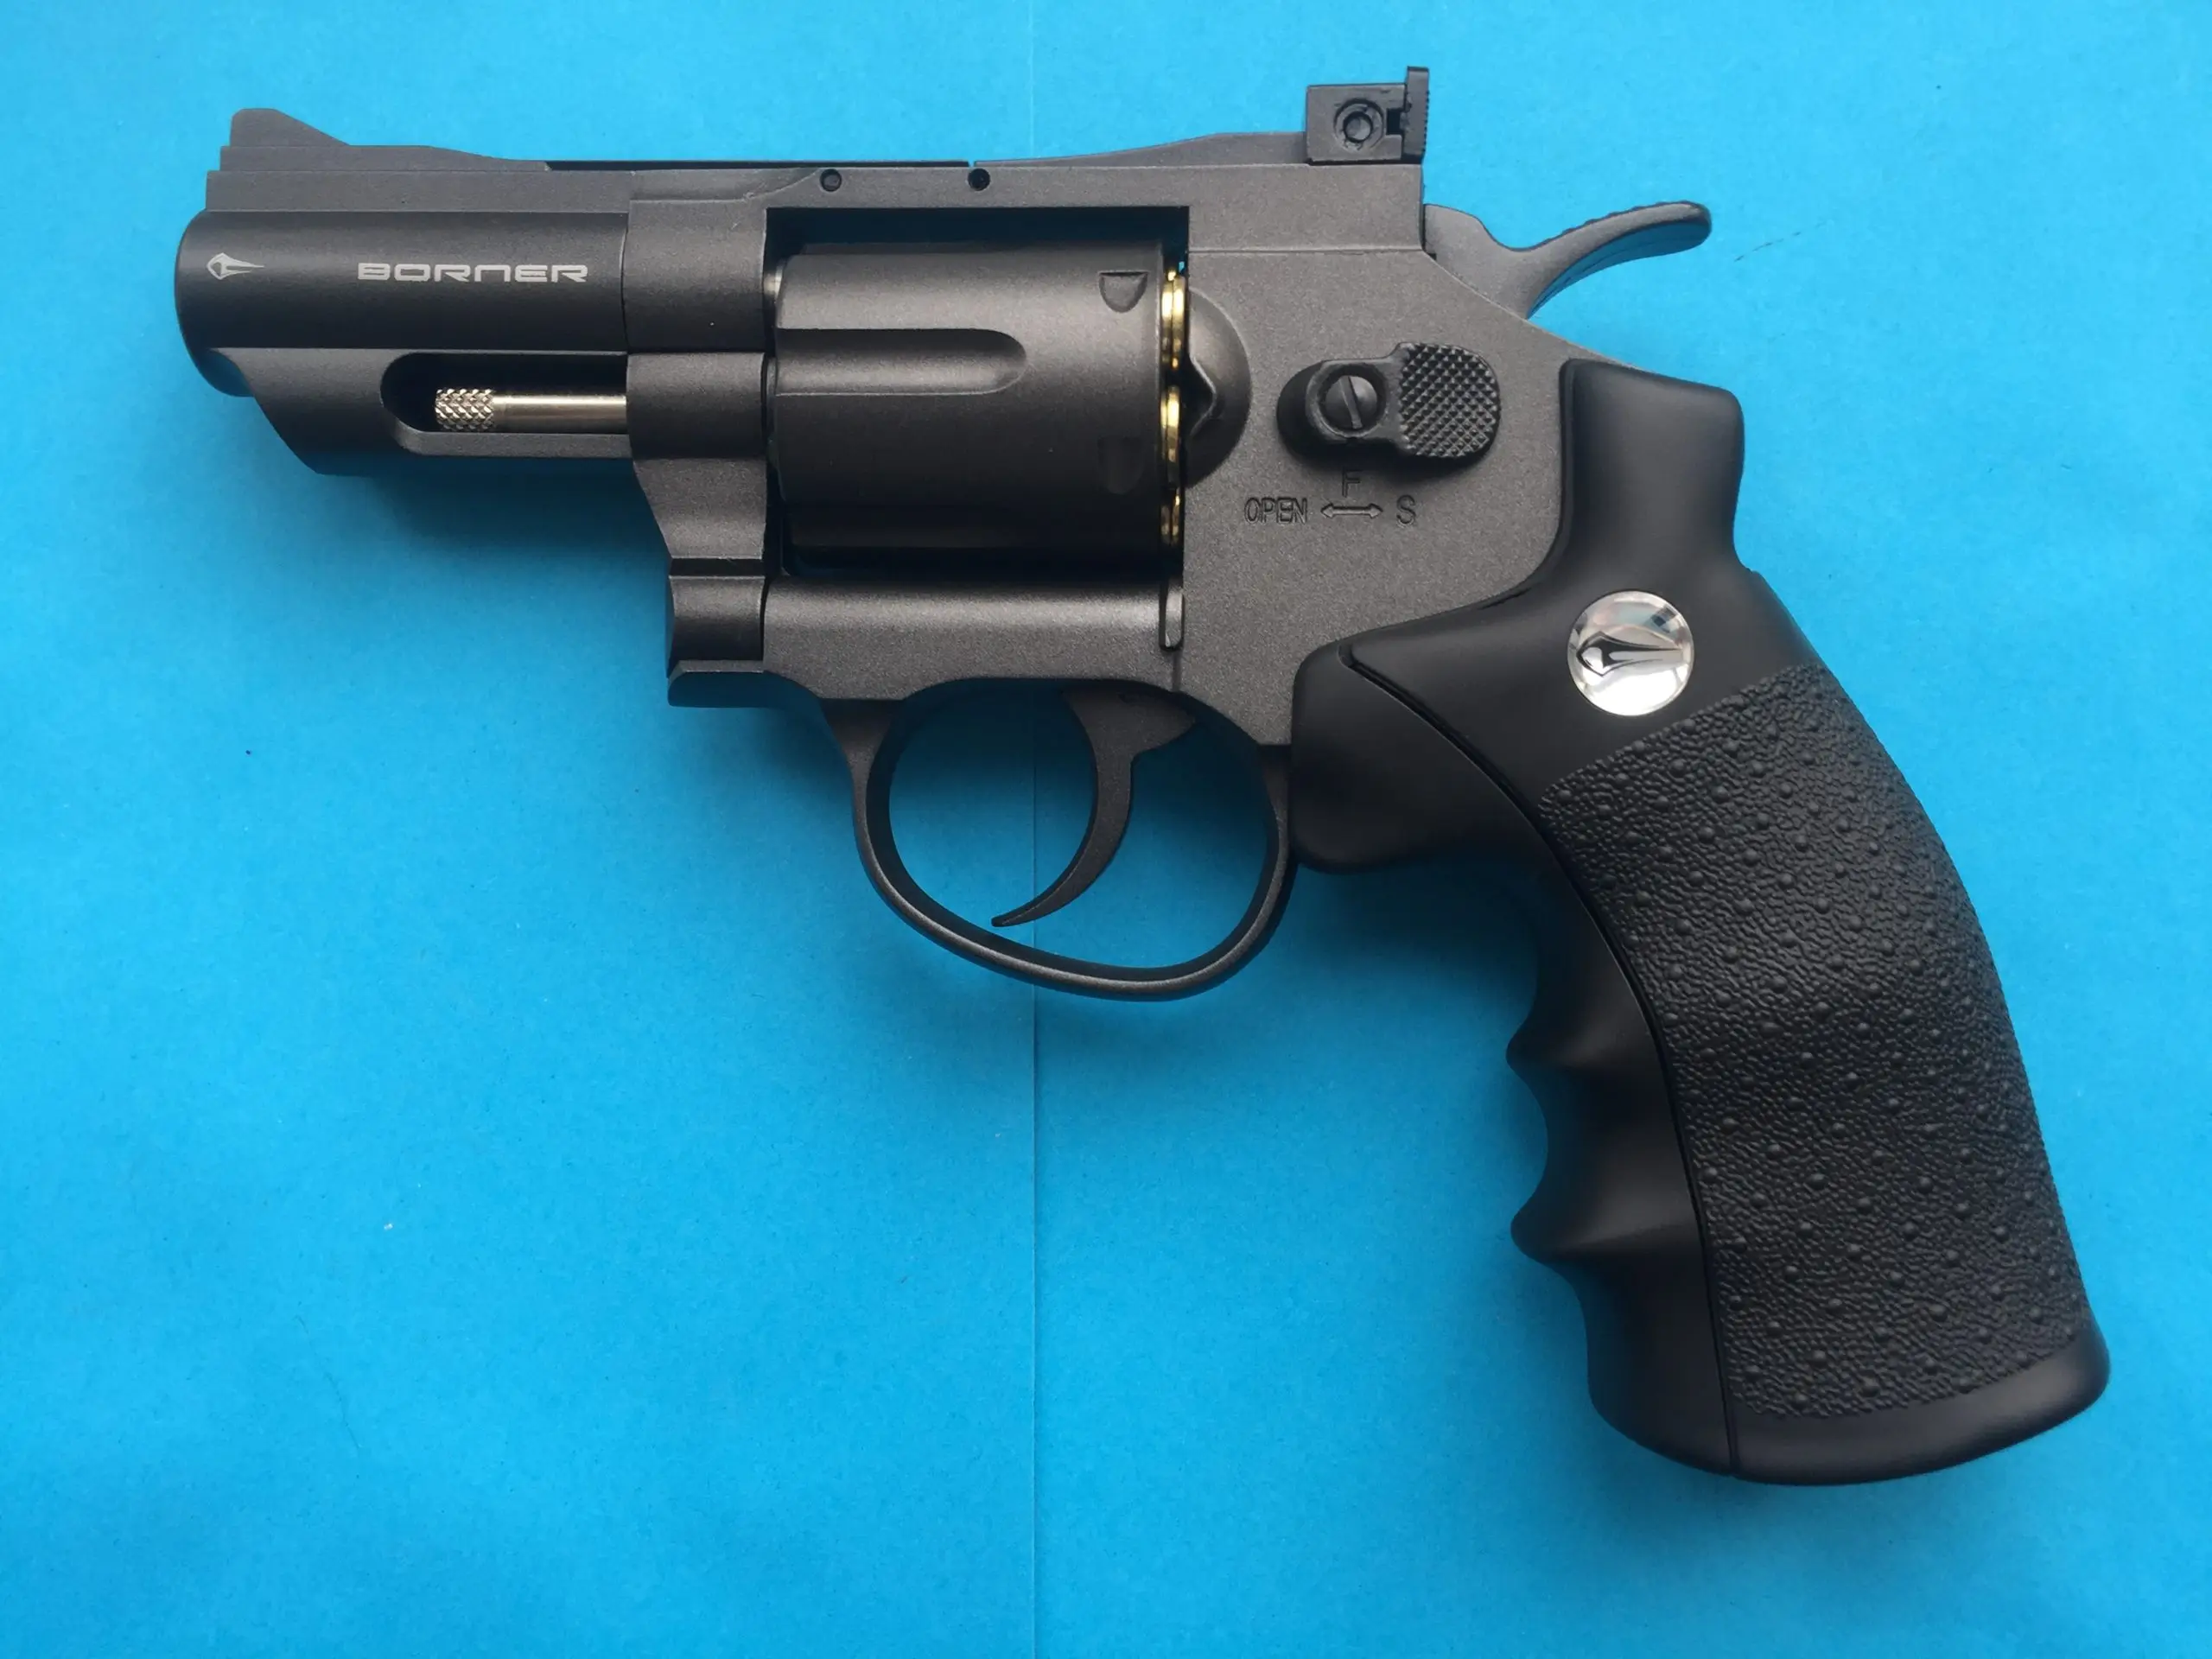 Пневматический револьвер Borner super Sport 708. Револьвер пневматический SW r25. Все модели пневматических пистолетов Борнер.